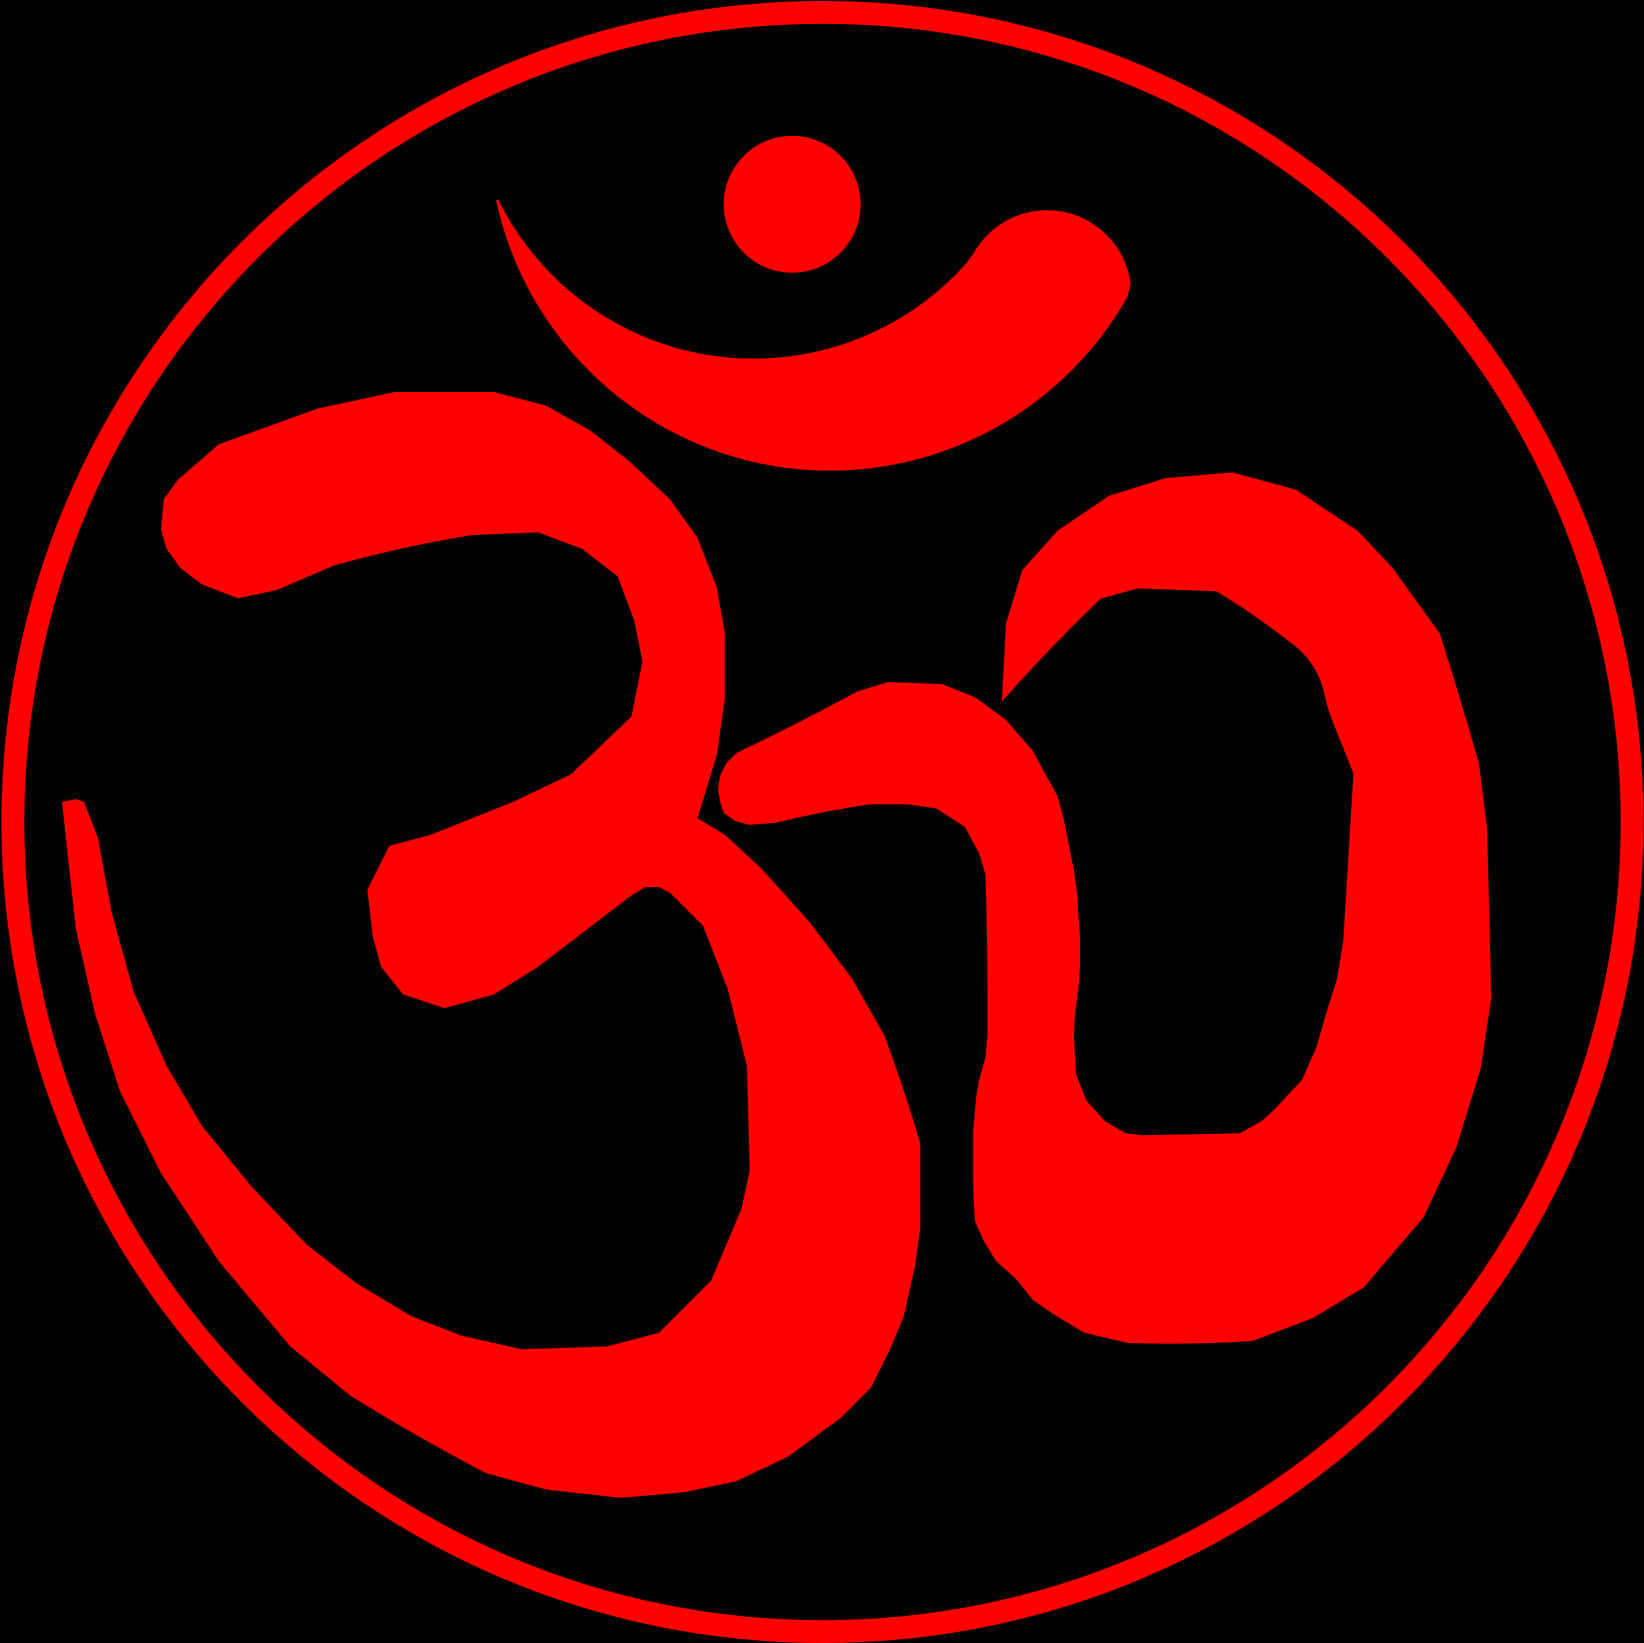 A Red Symbol In A Circle